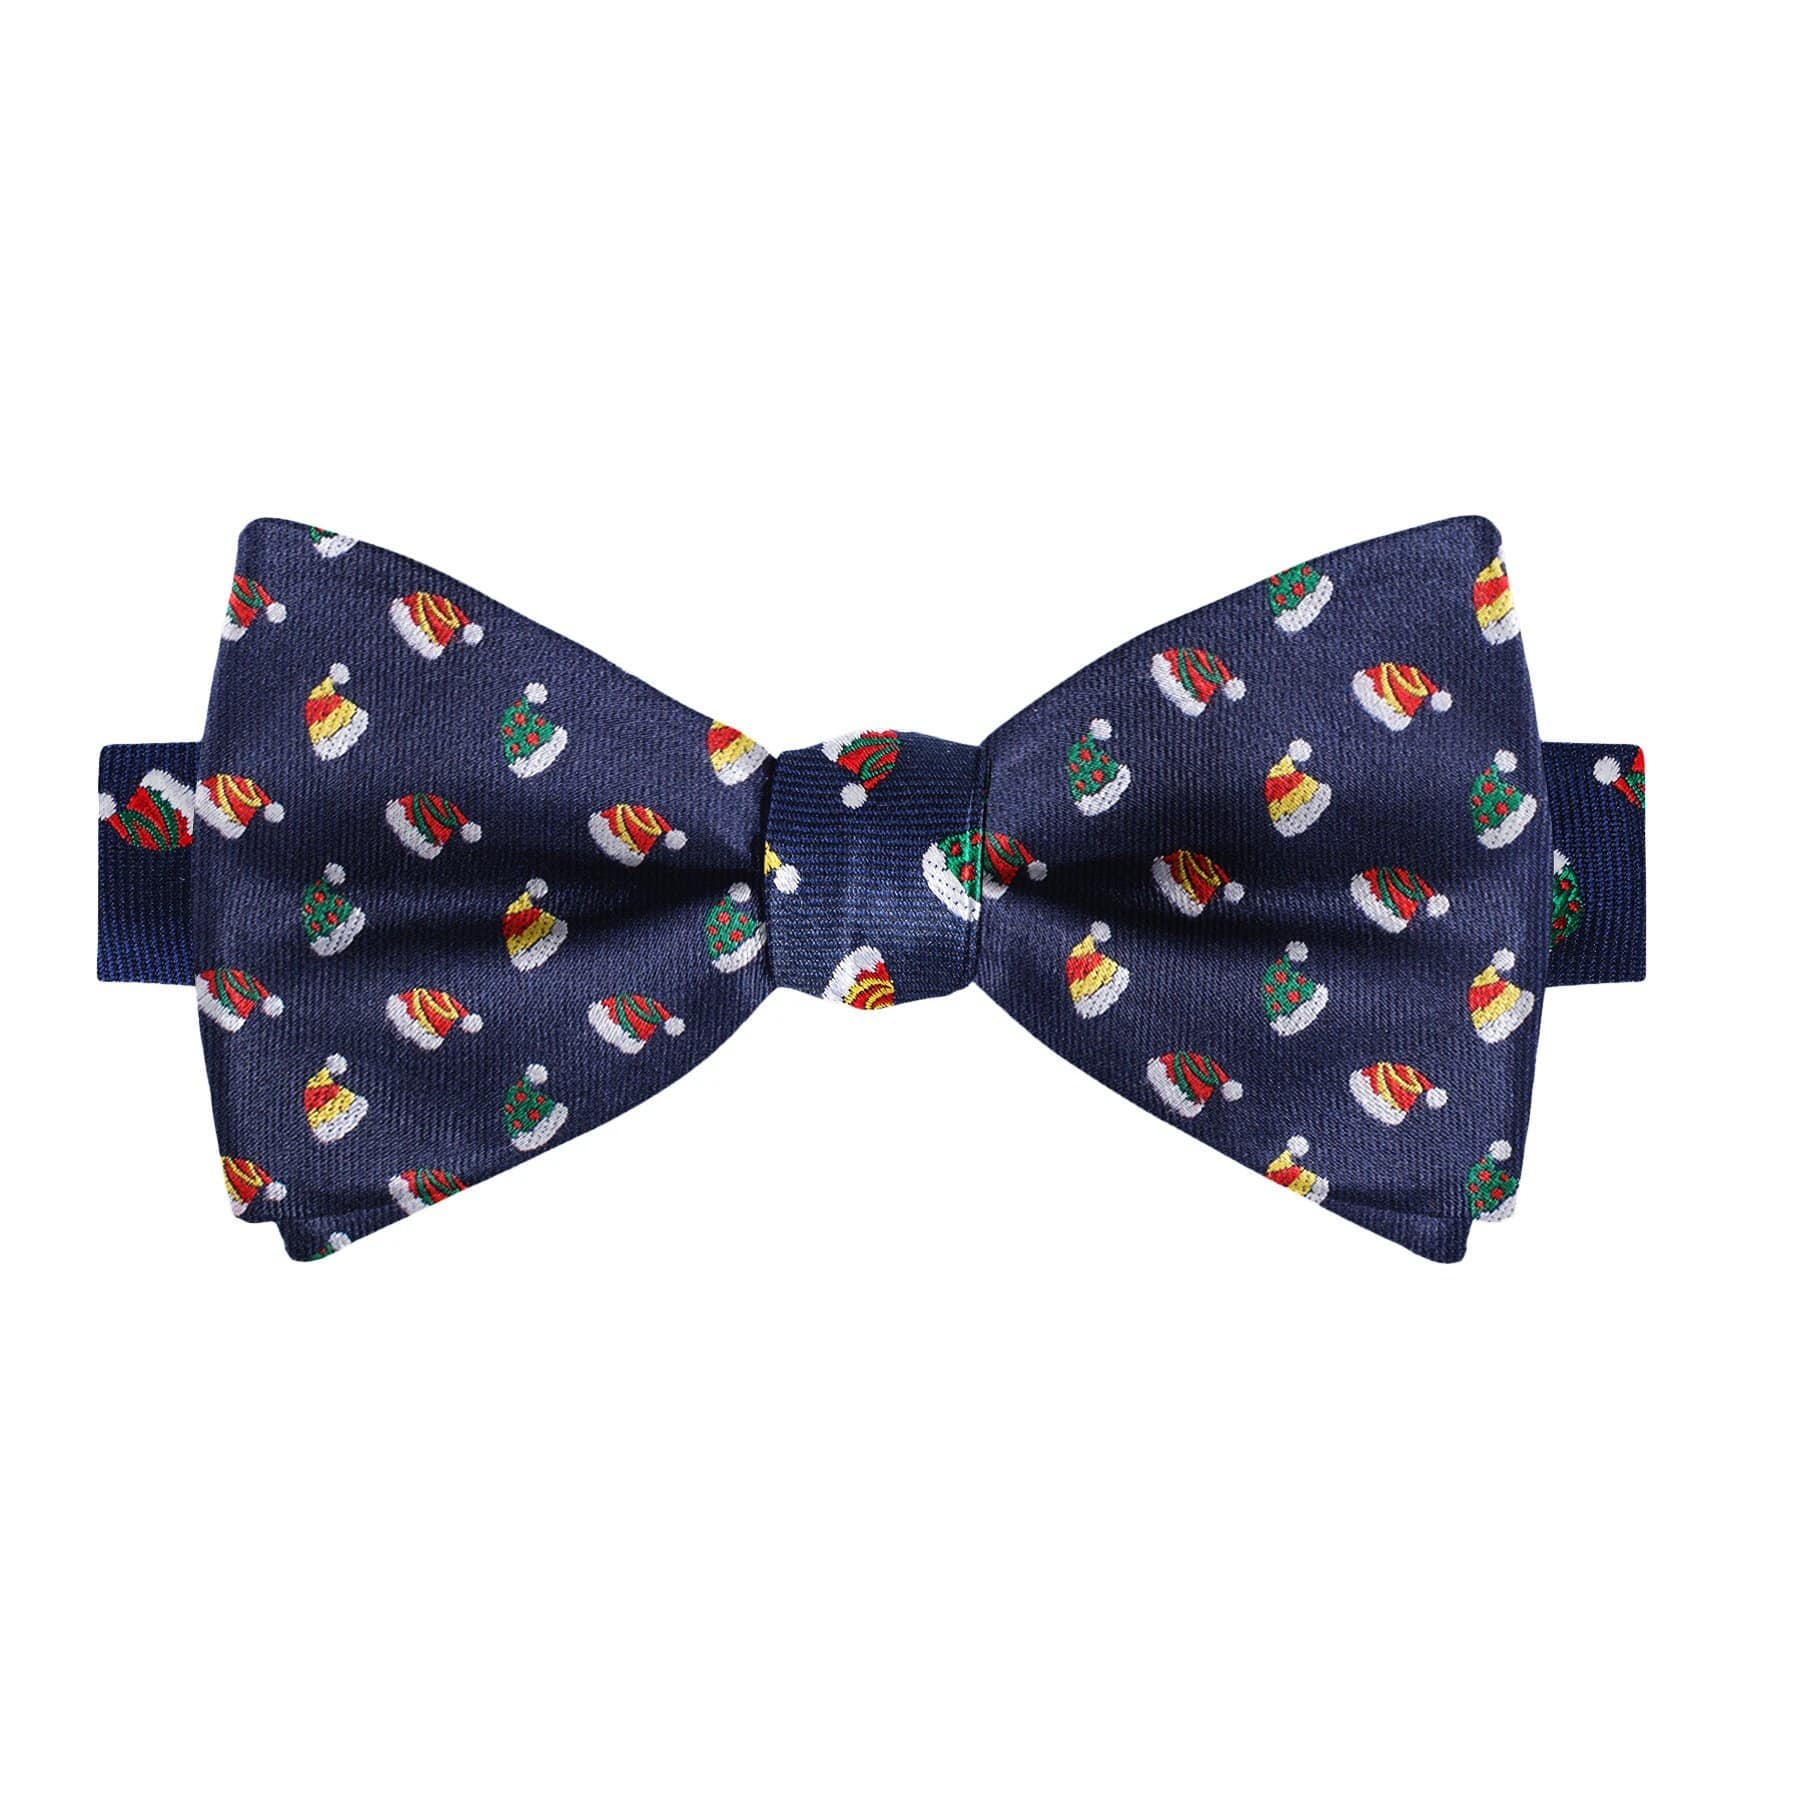 Nicholas Christmas Bow Tie - Tie, bowtie, pocket square  | Kissties